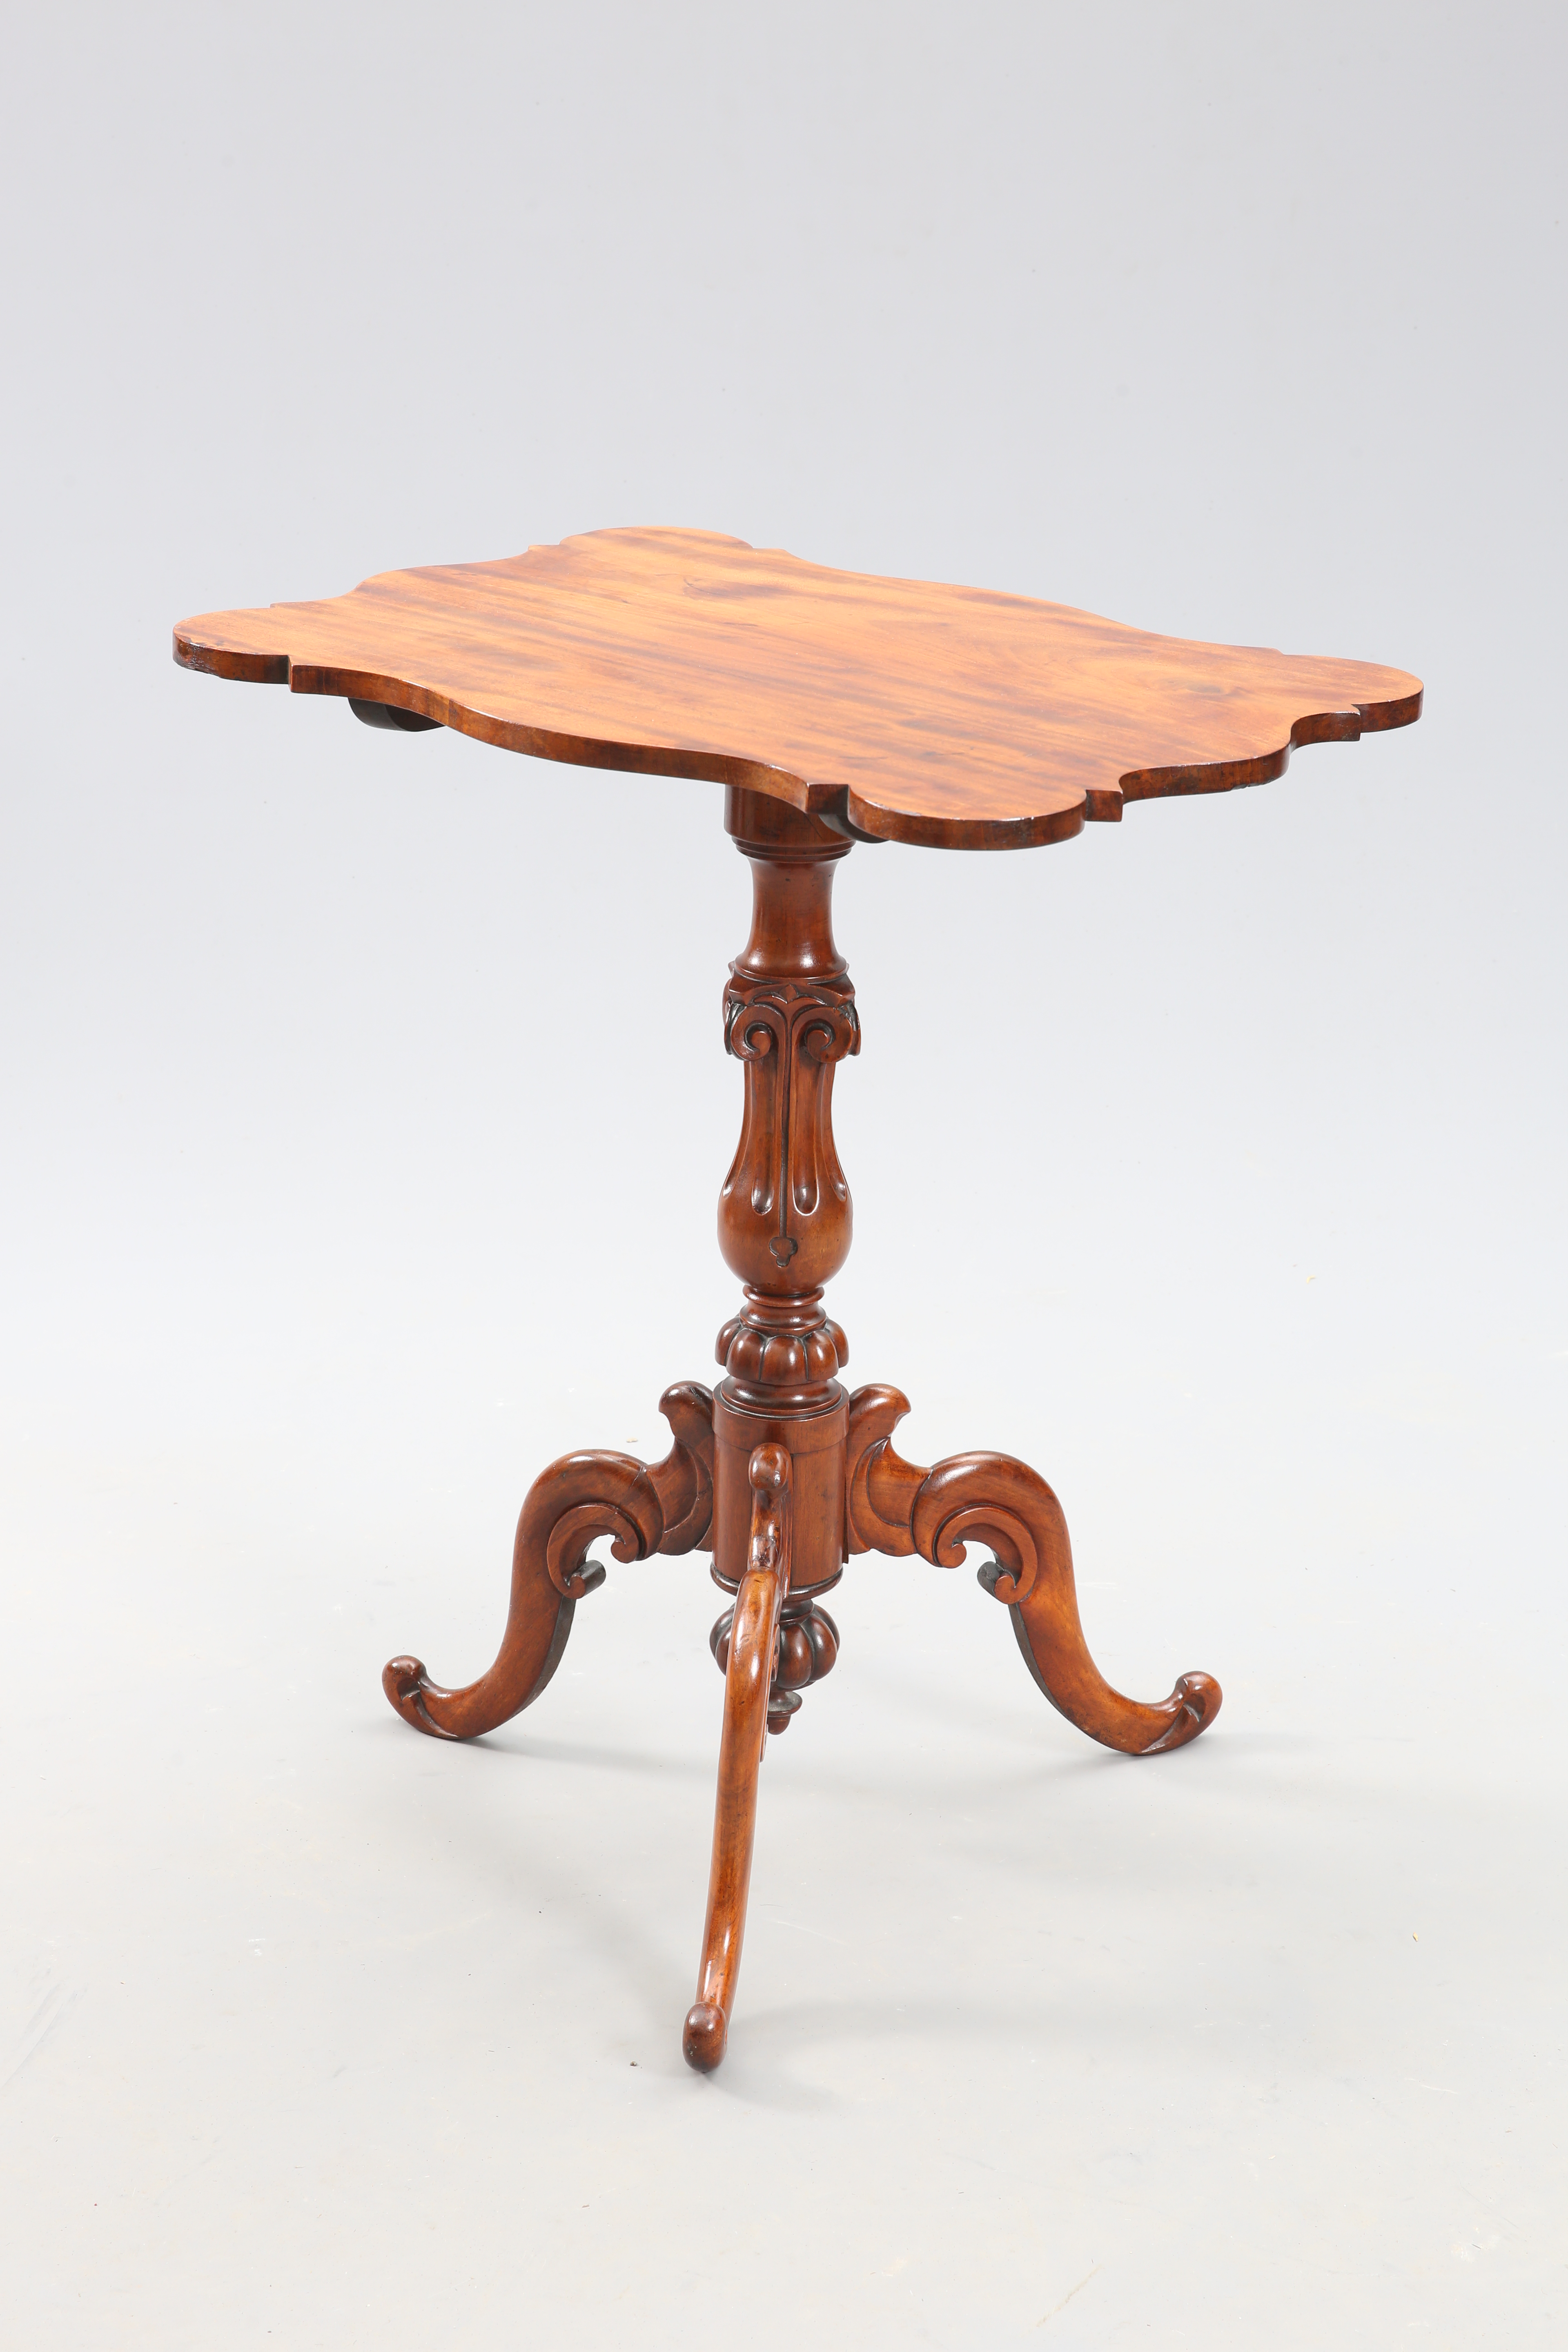 A VICTORIAN MAHOGANY TRIPOD TABLE, CIRCA 1860-80